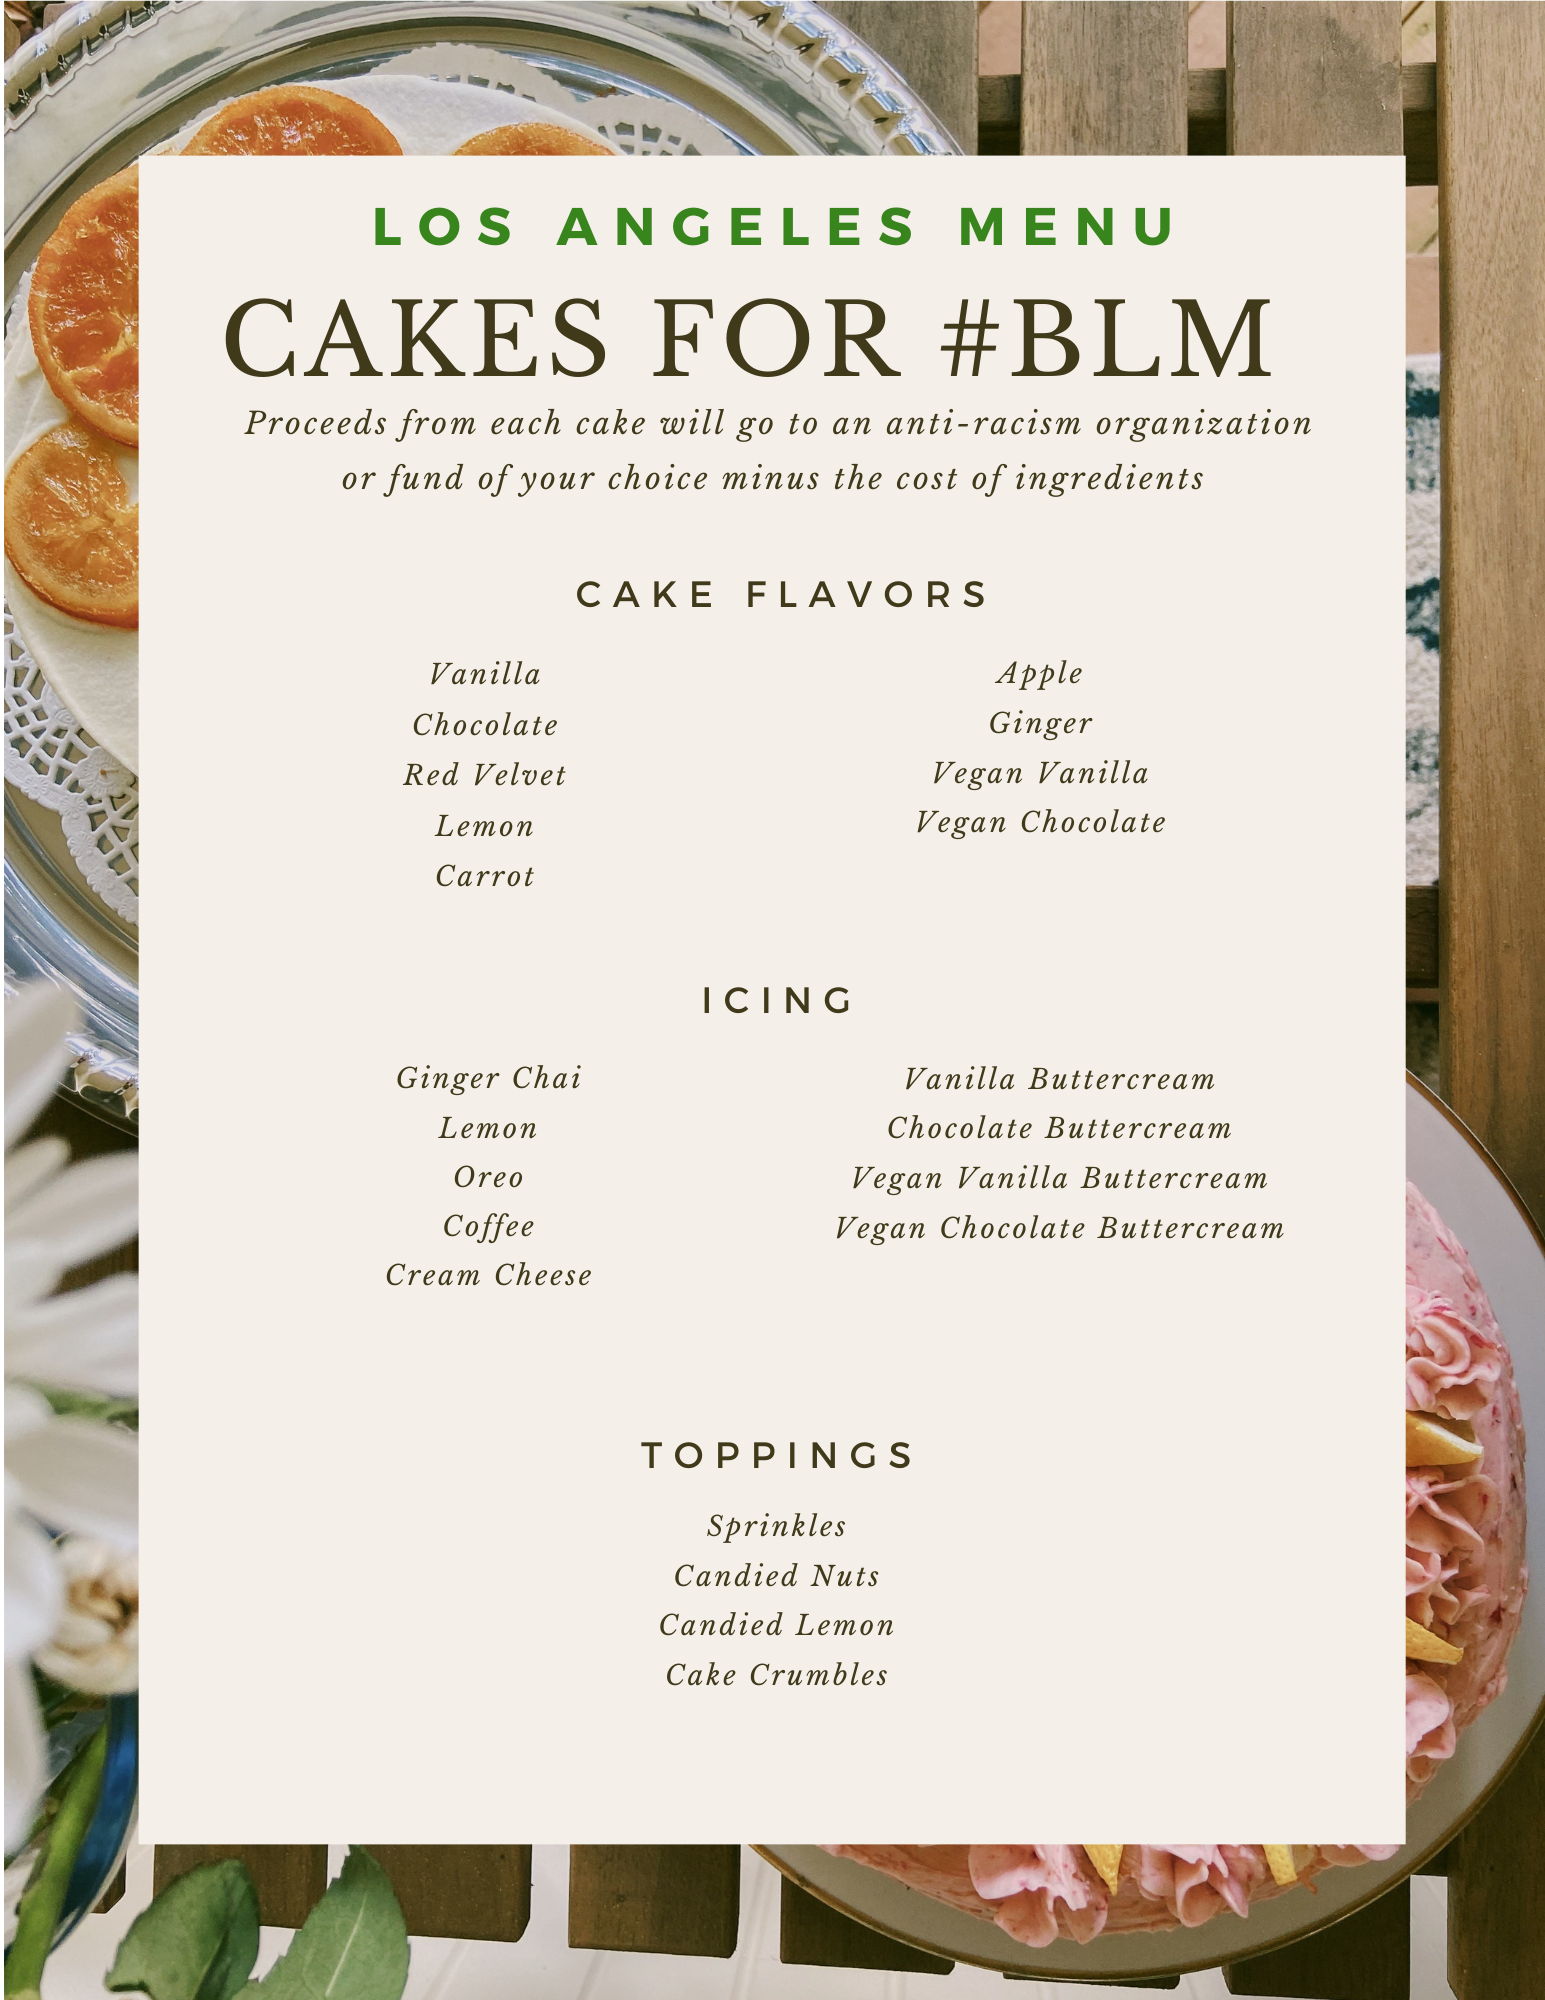 Cakes for BLM - Los Angeles, California menu